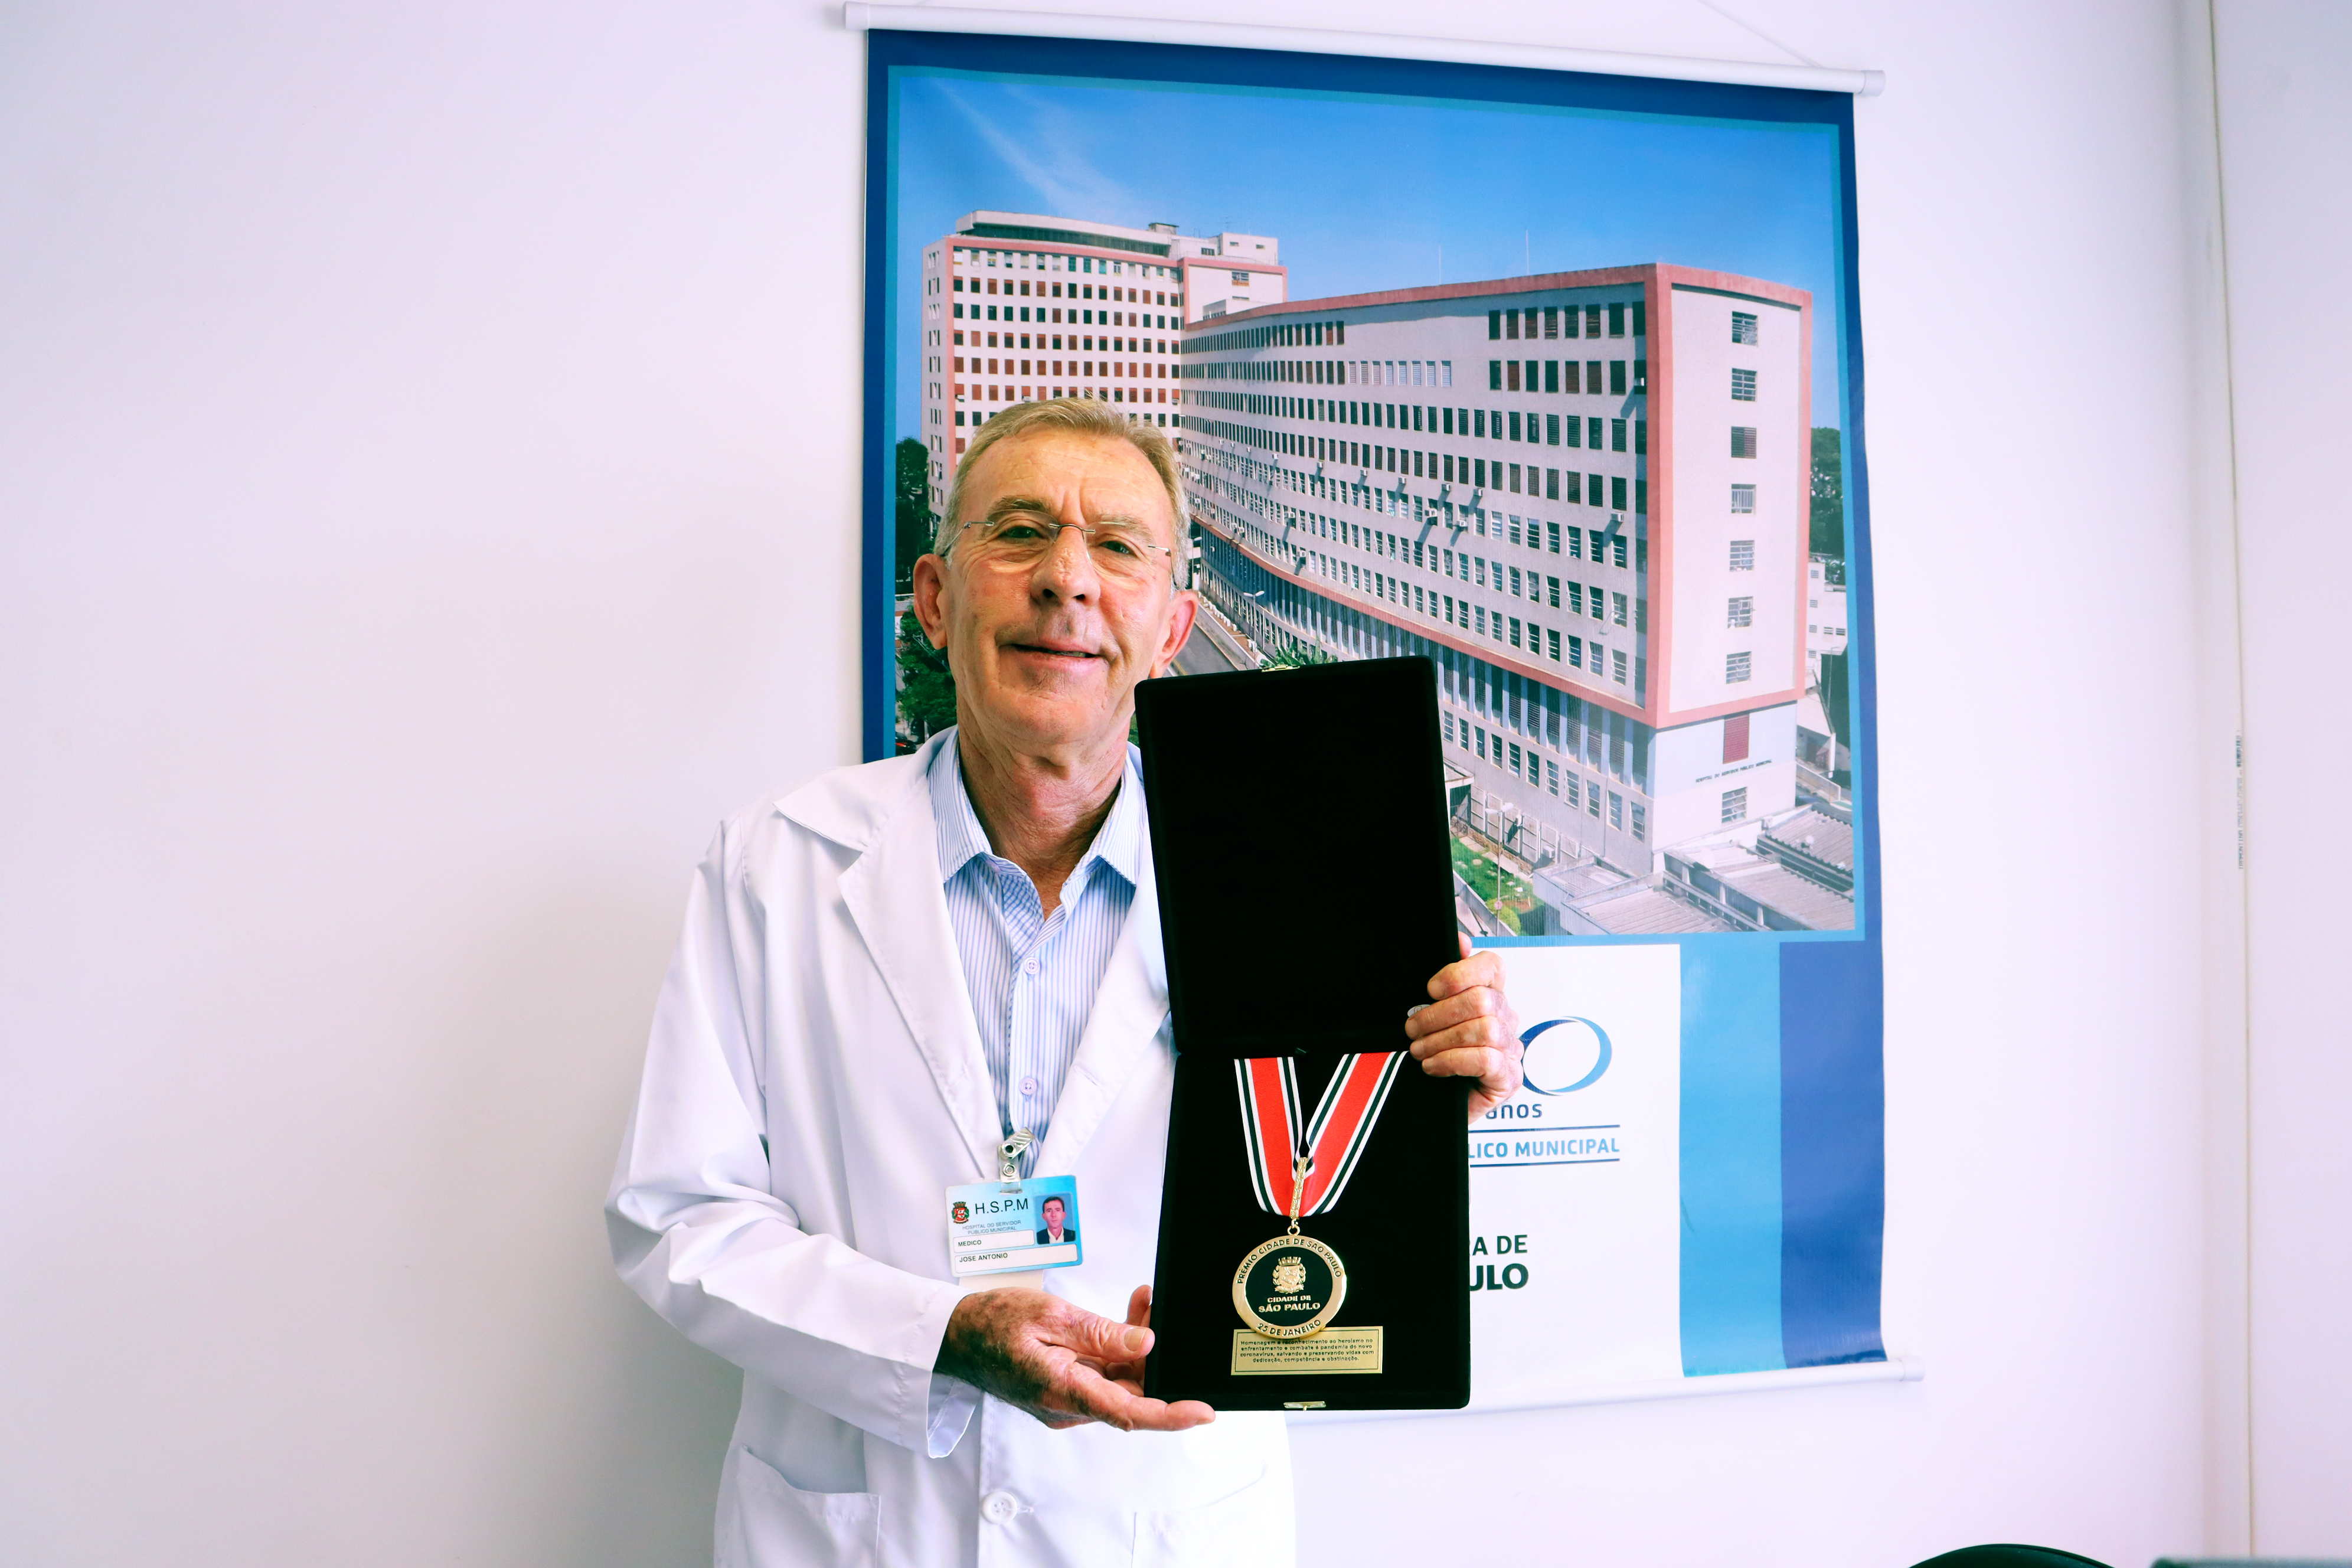 Foto do dr. Volpiani sorridente mostrando a medalha